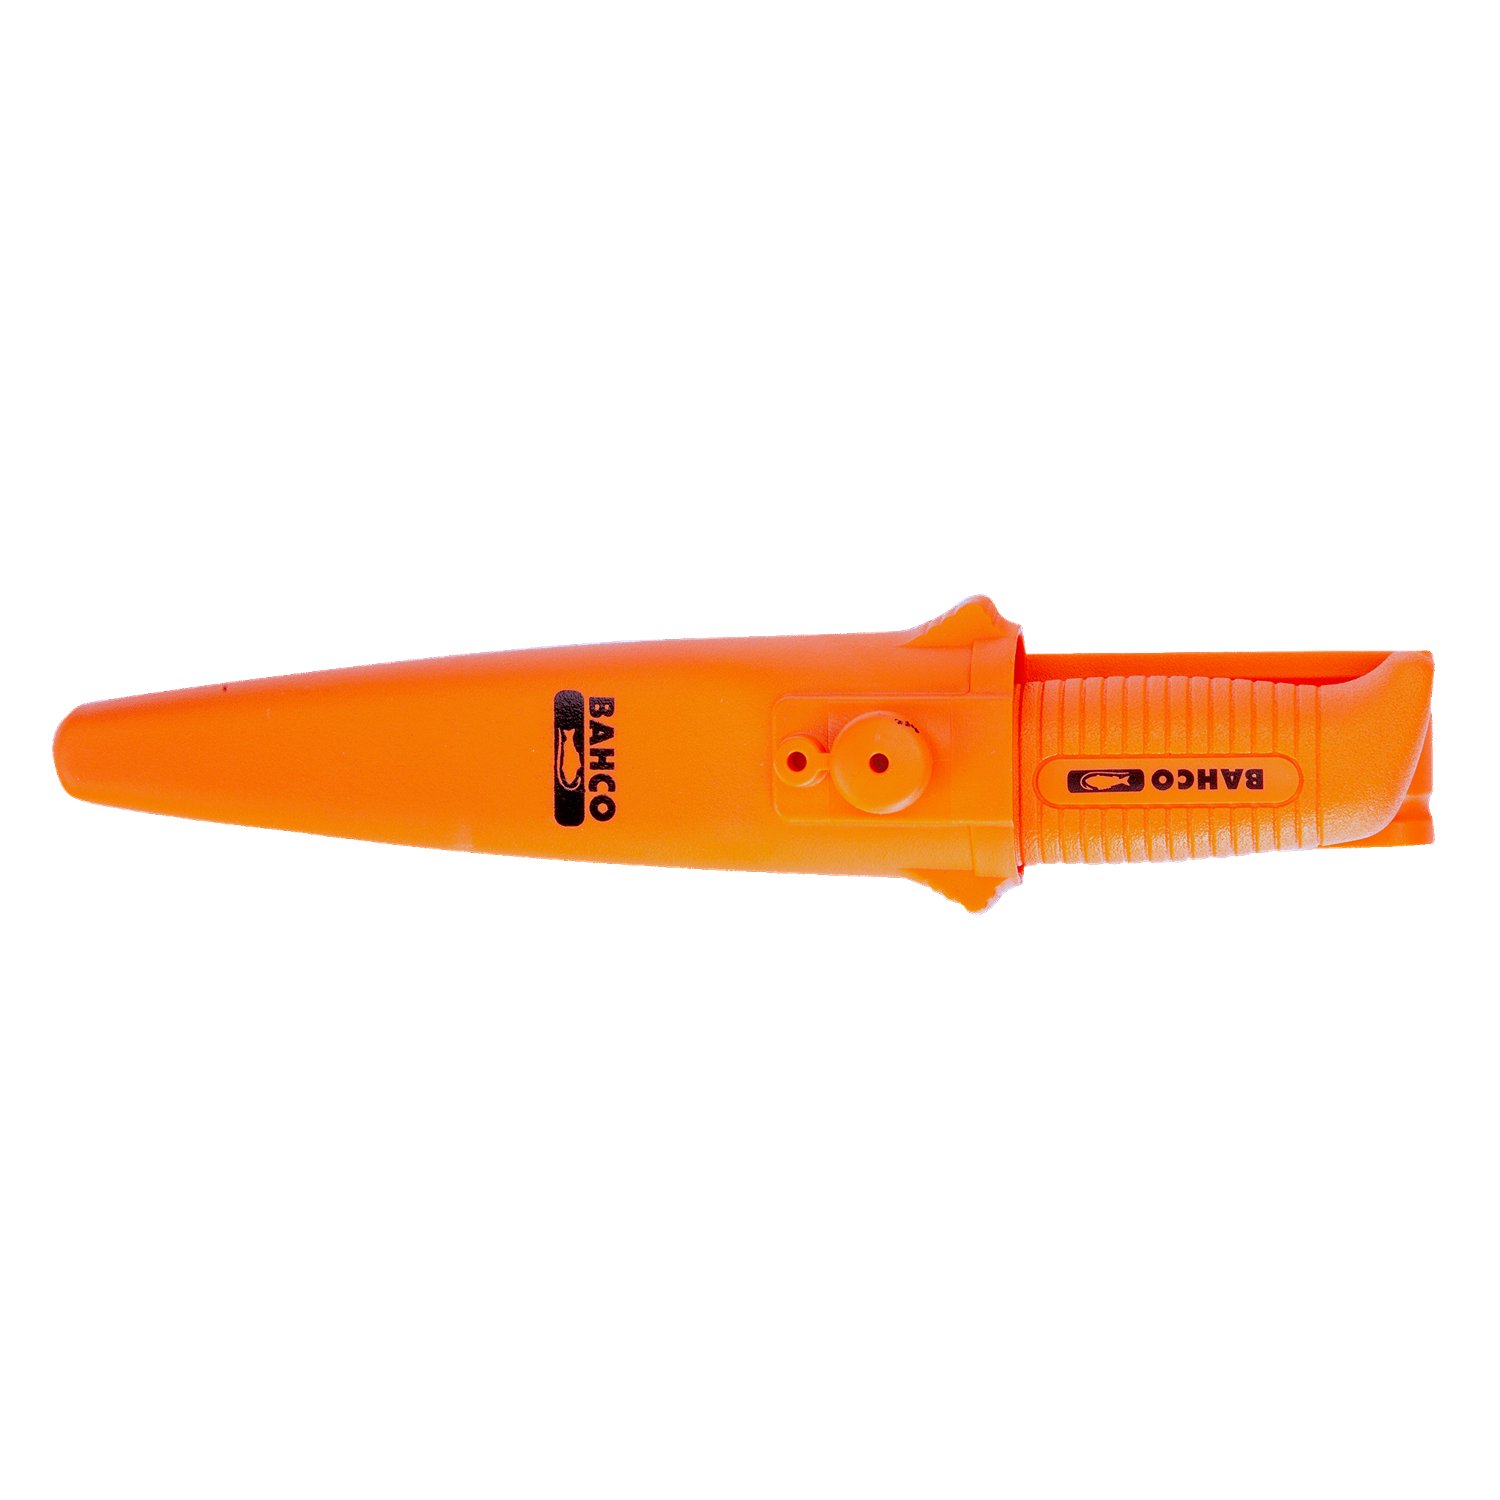 BAHCO 1446 Multipurpose Tradesman Knife, 15 pcs Counter Display - Premium Multipurpose Tradesman Knife from BAHCO - Shop now at Yew Aik.